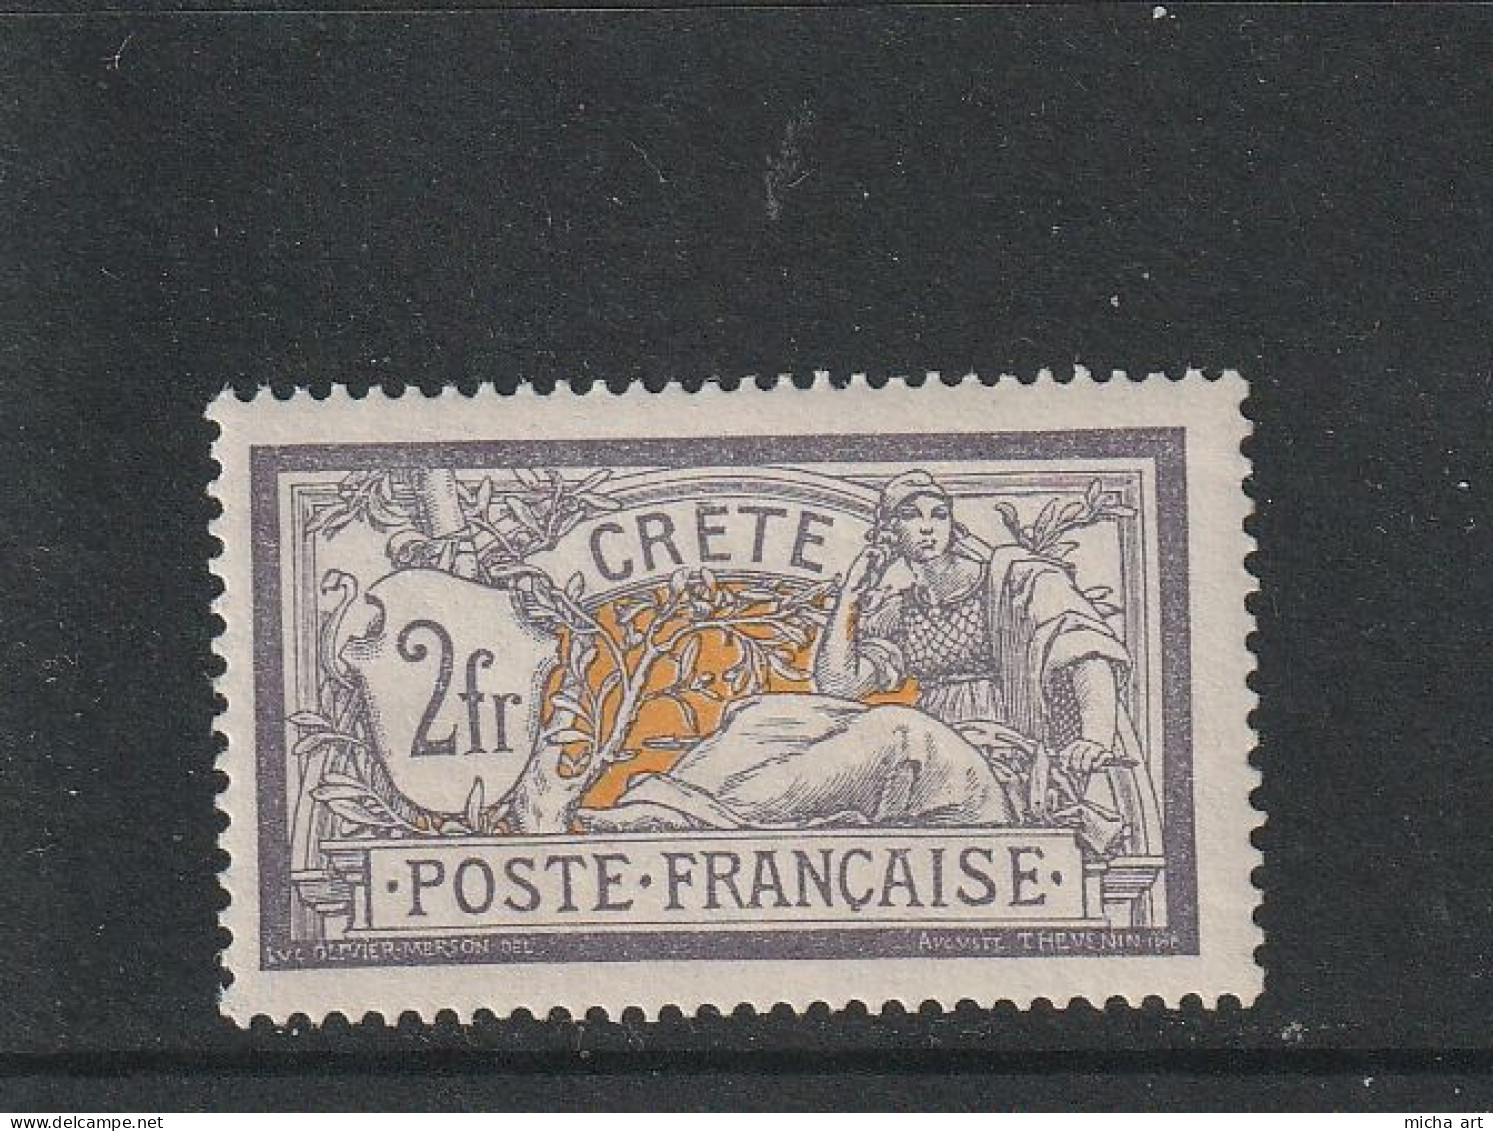 Greece Crete French Post Office 1902 - 1913 Crete Issue 2 Fr. MNH W1105 - Ongebruikt